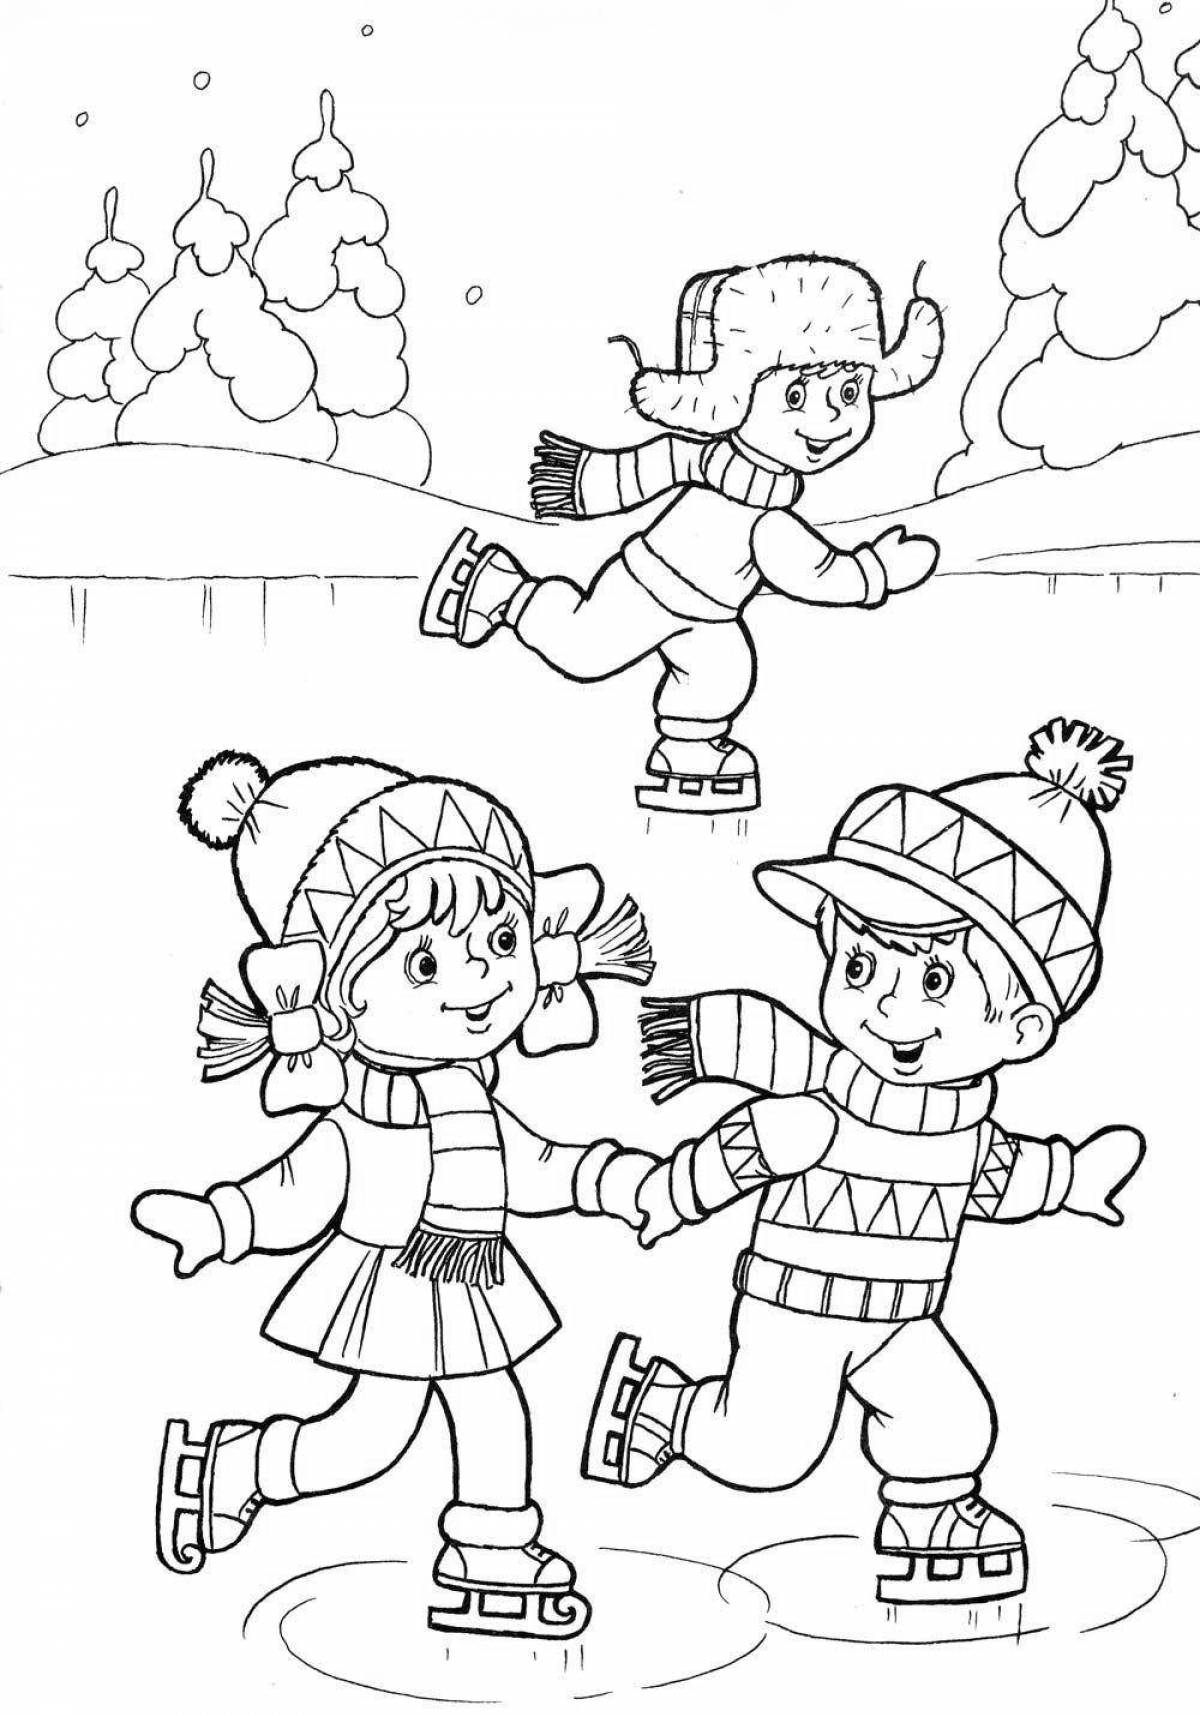 Joyful winter fun coloring book